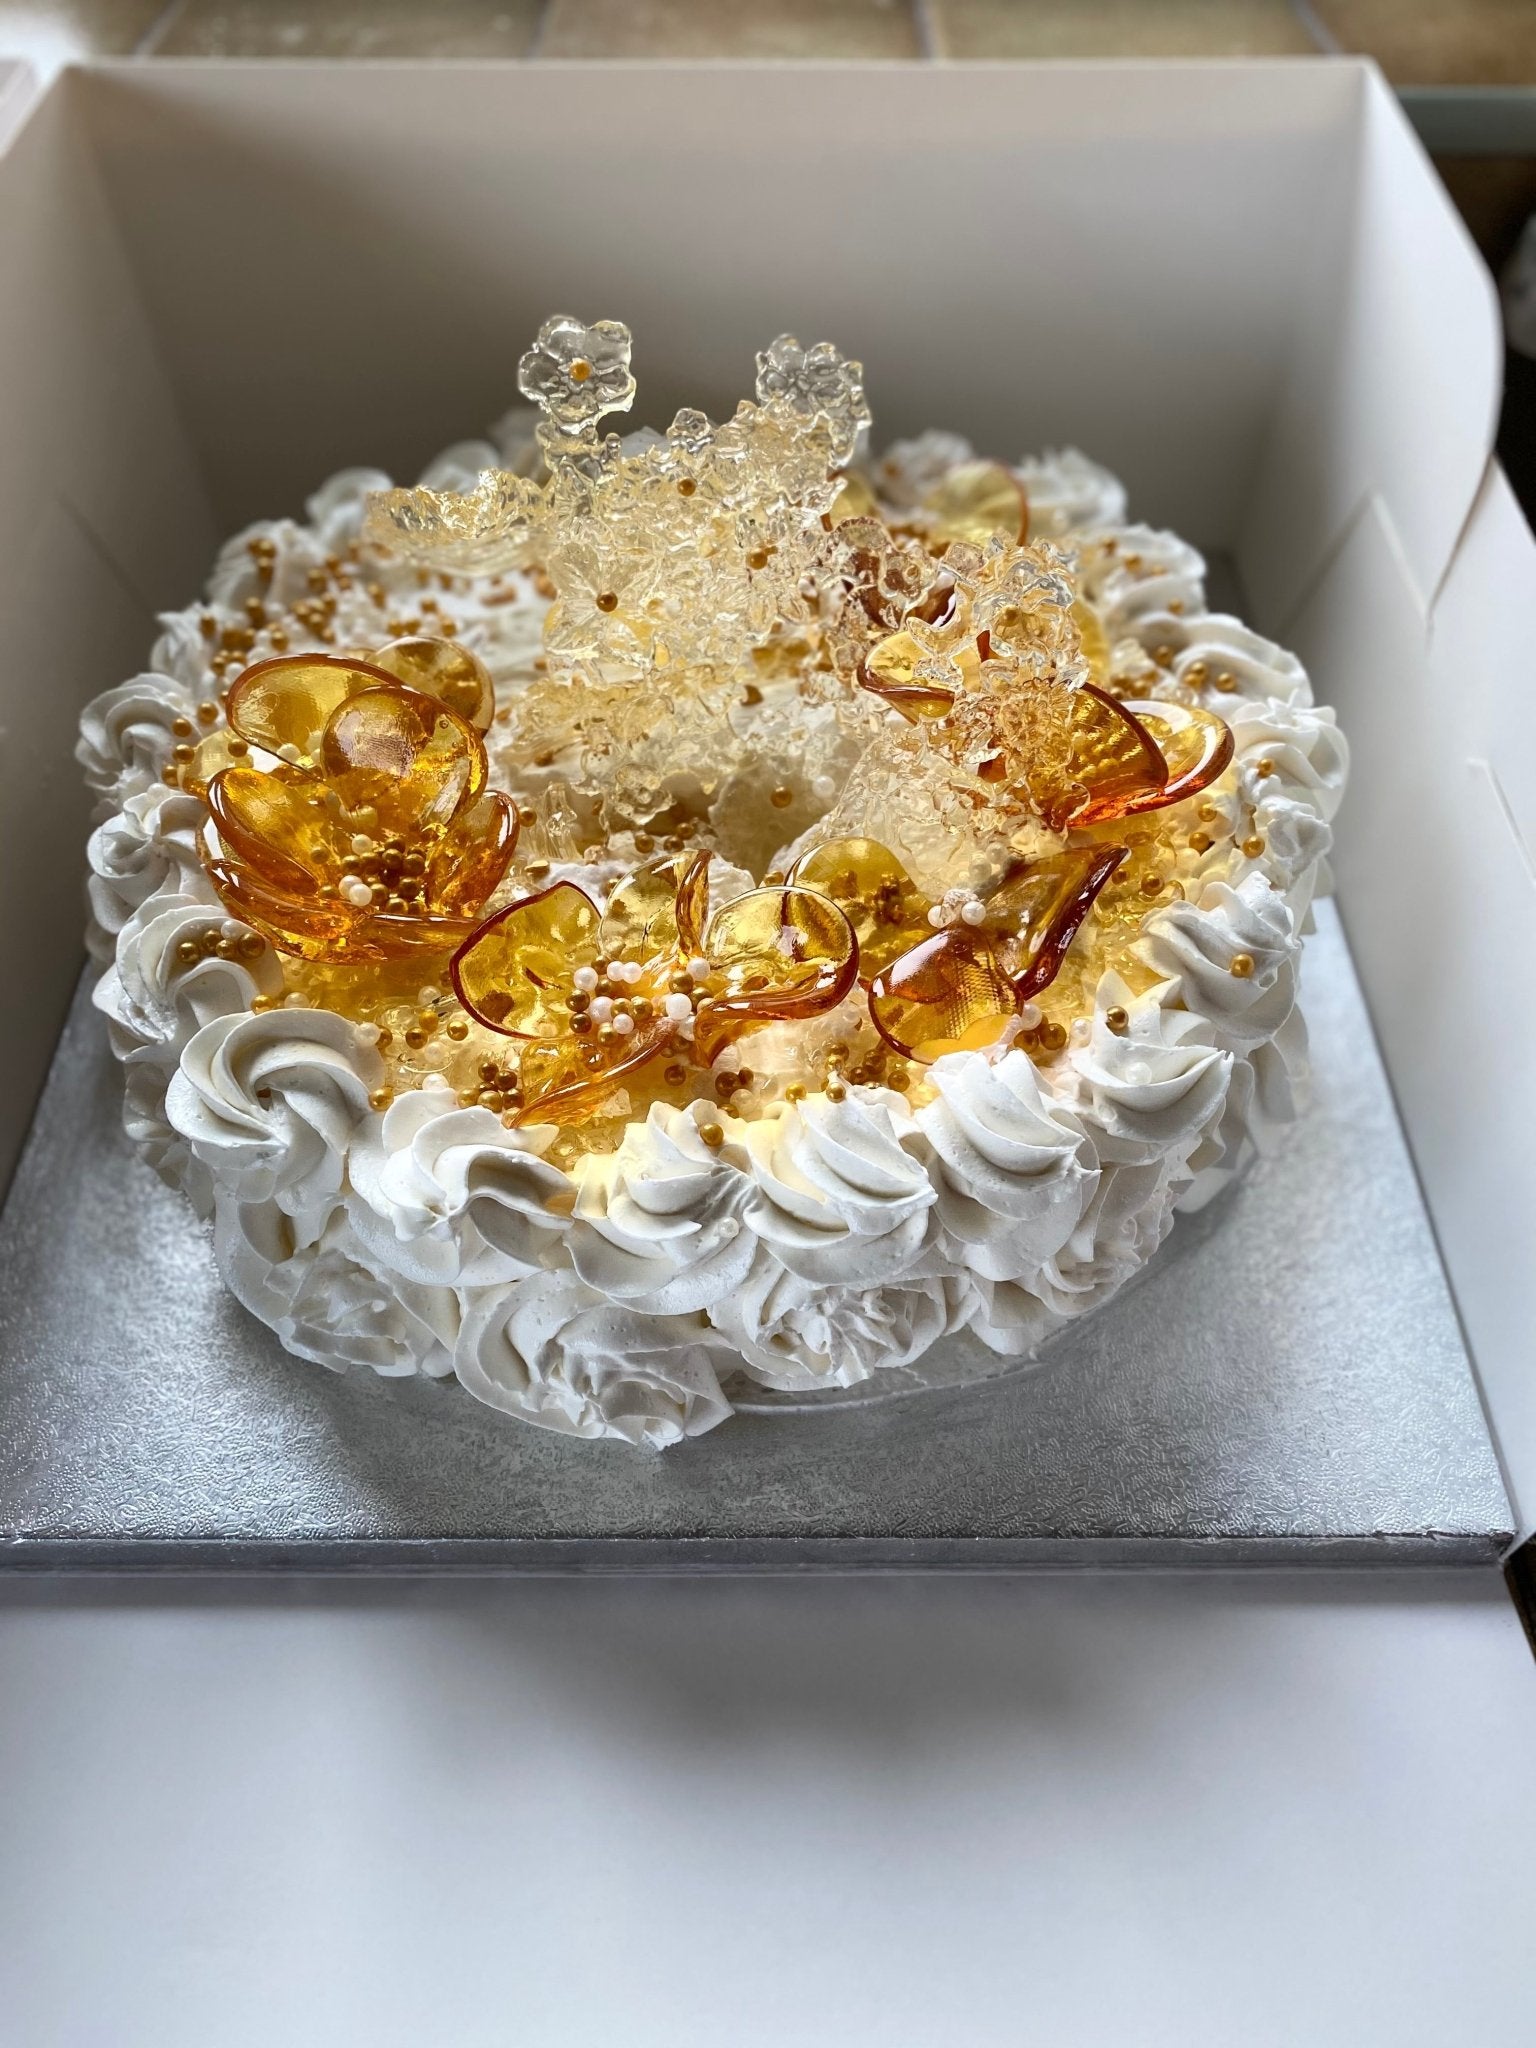 Vanilla Beauty - Cultured Bakehouse